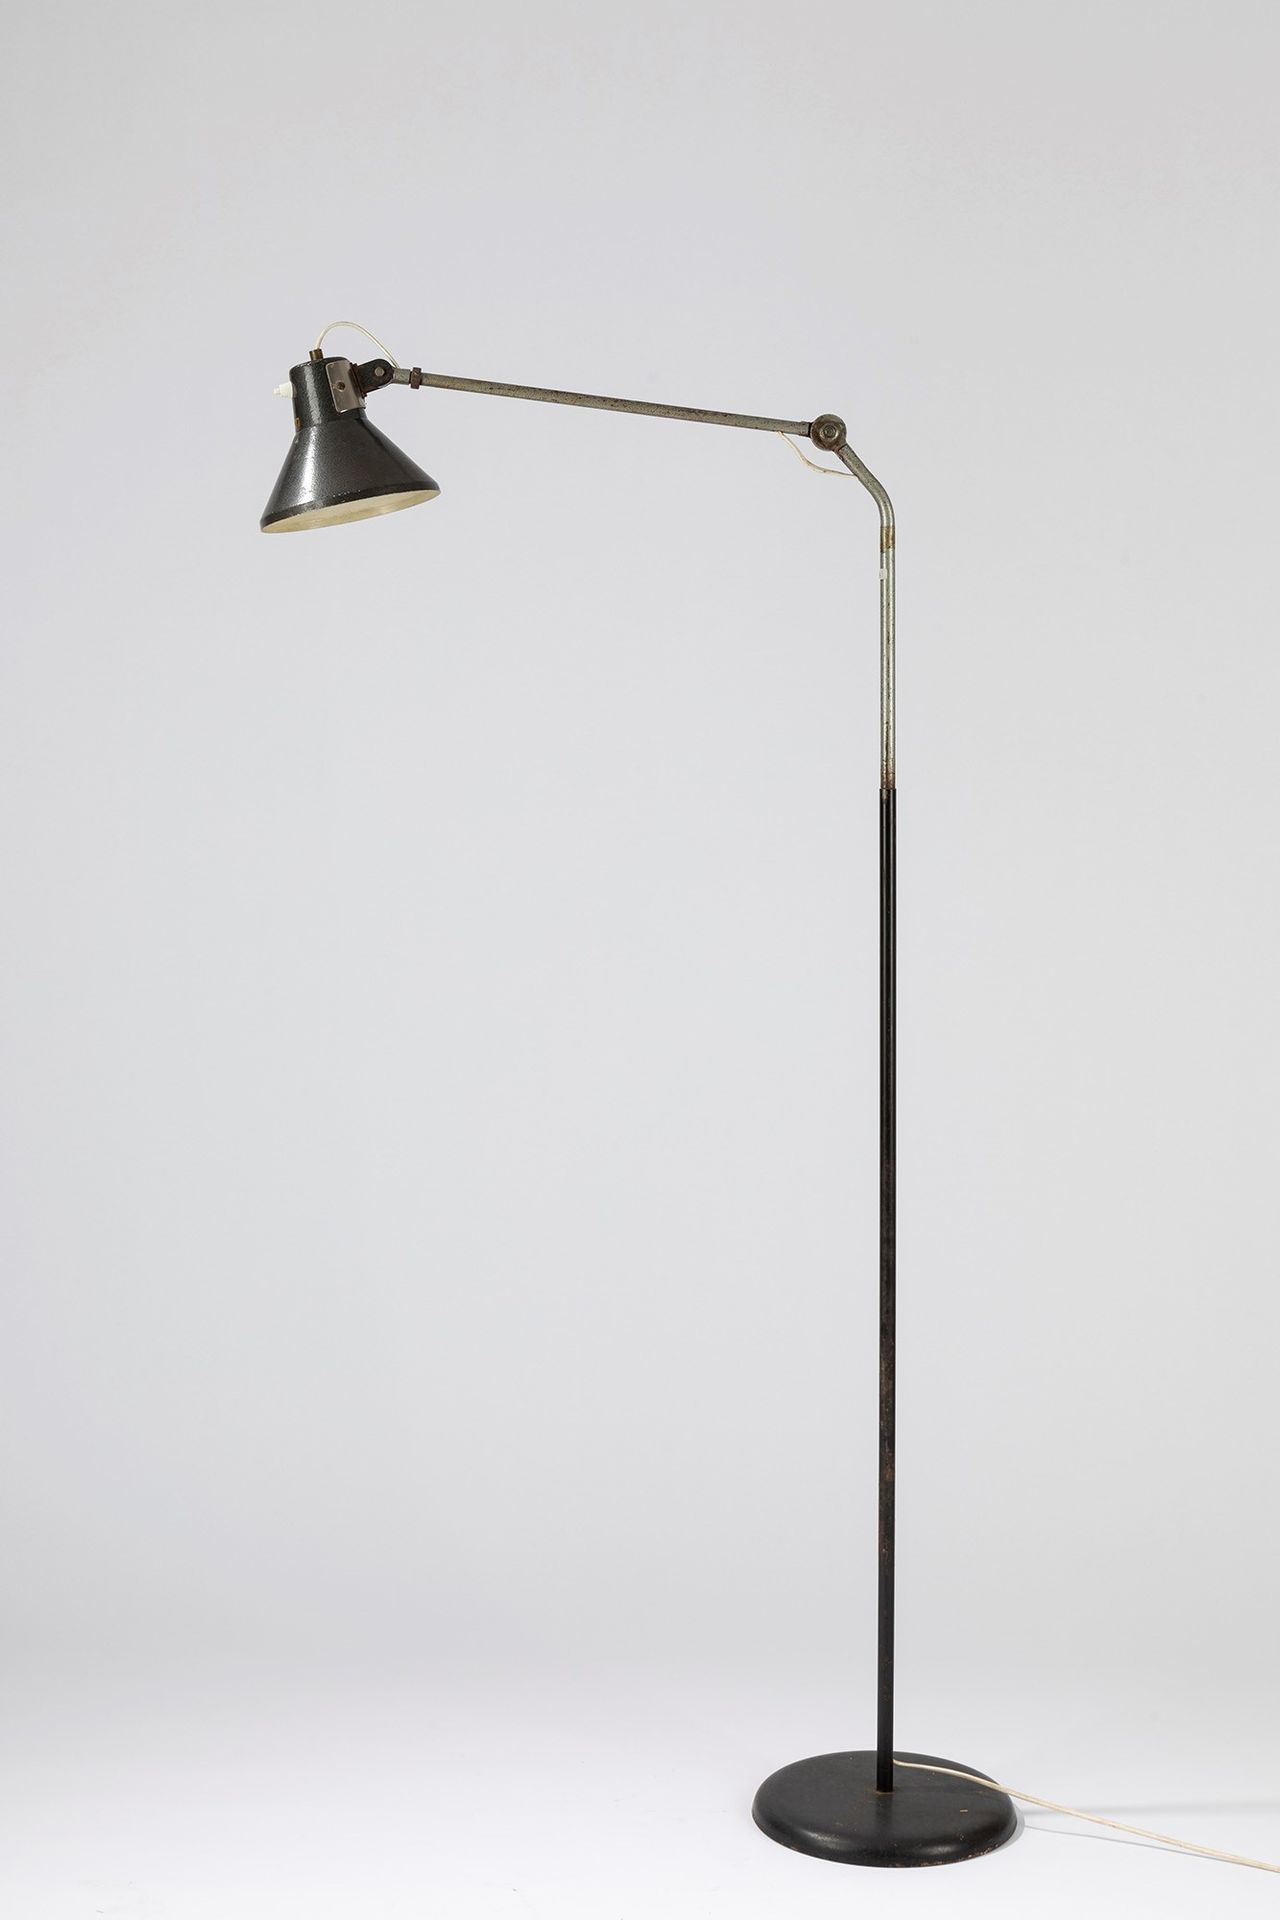 ITALIAN MANUFACTURE Lámpara de pie, época de los 50

cm h regulable 135 x 60
en &hellip;